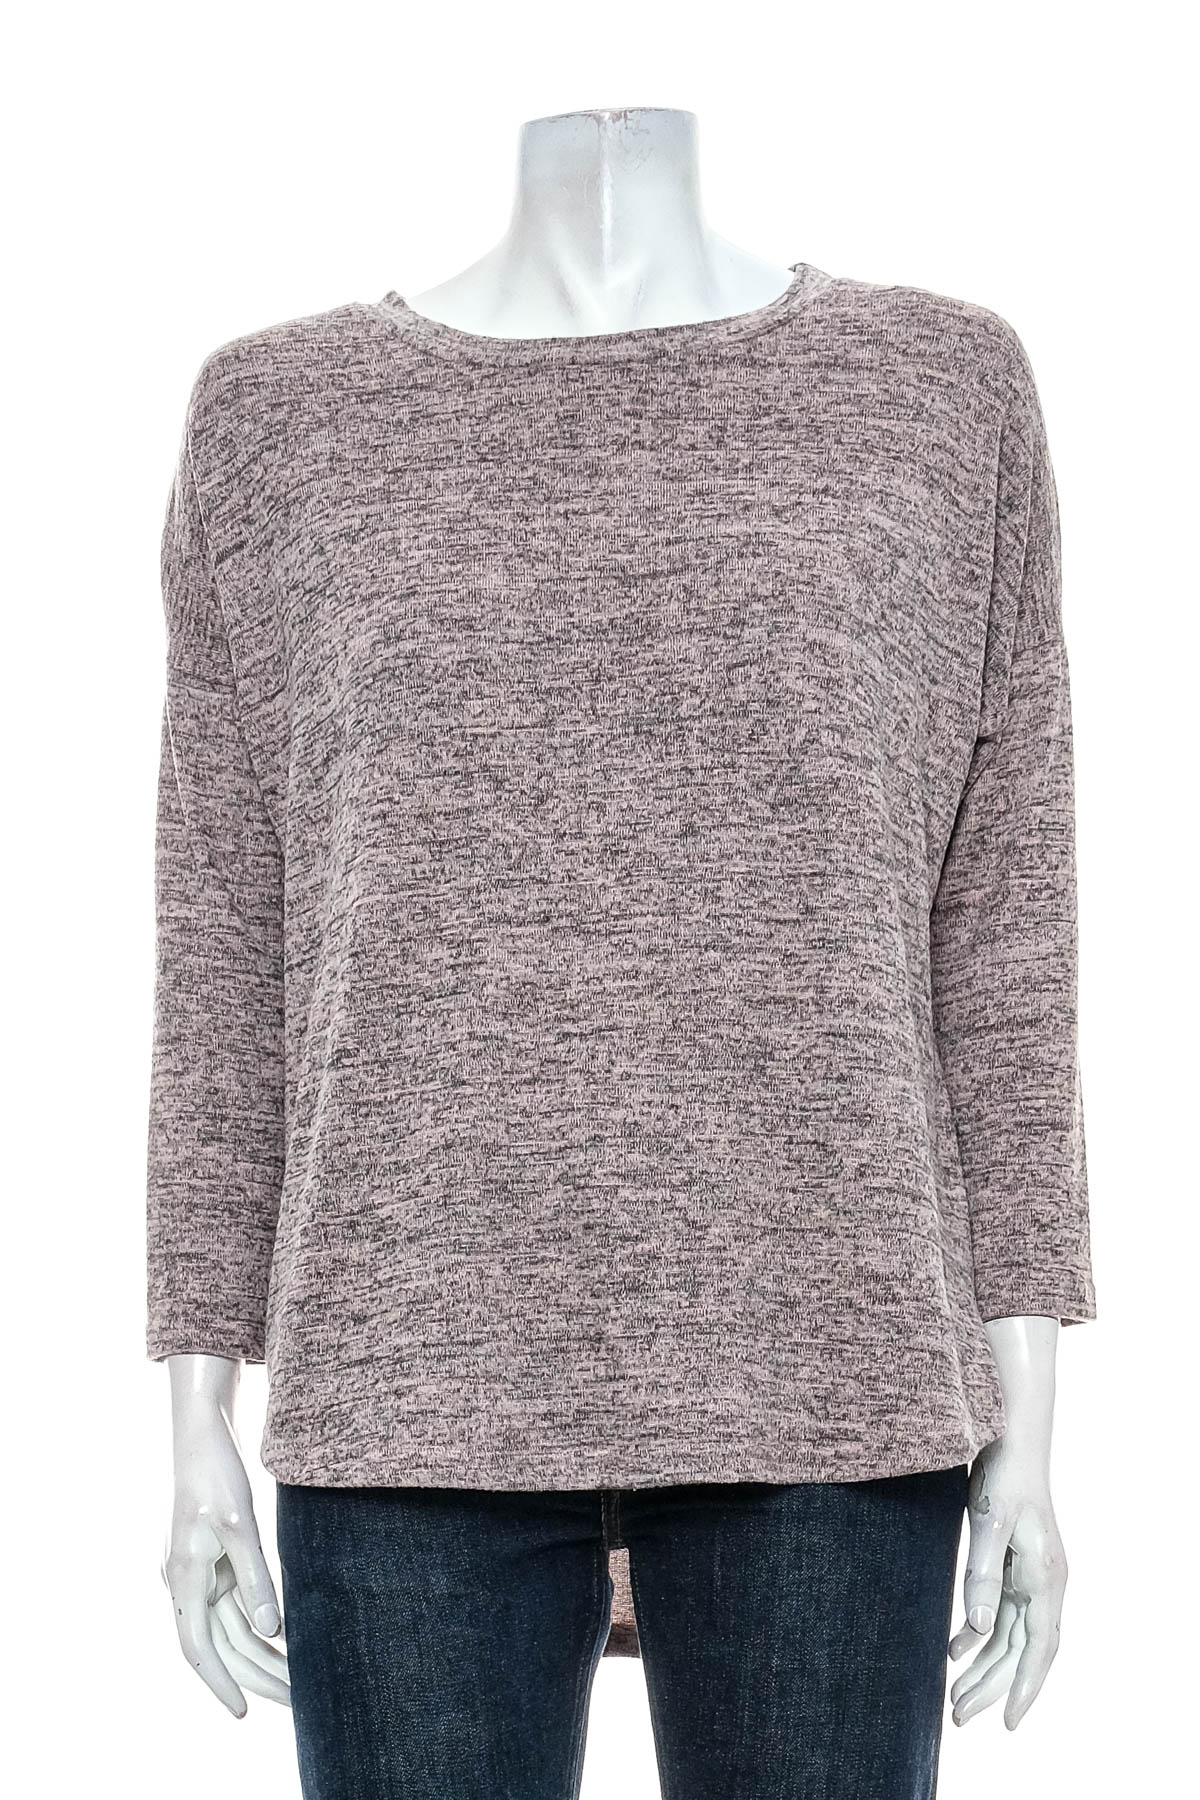 Women's sweater - Clara Kay - 0